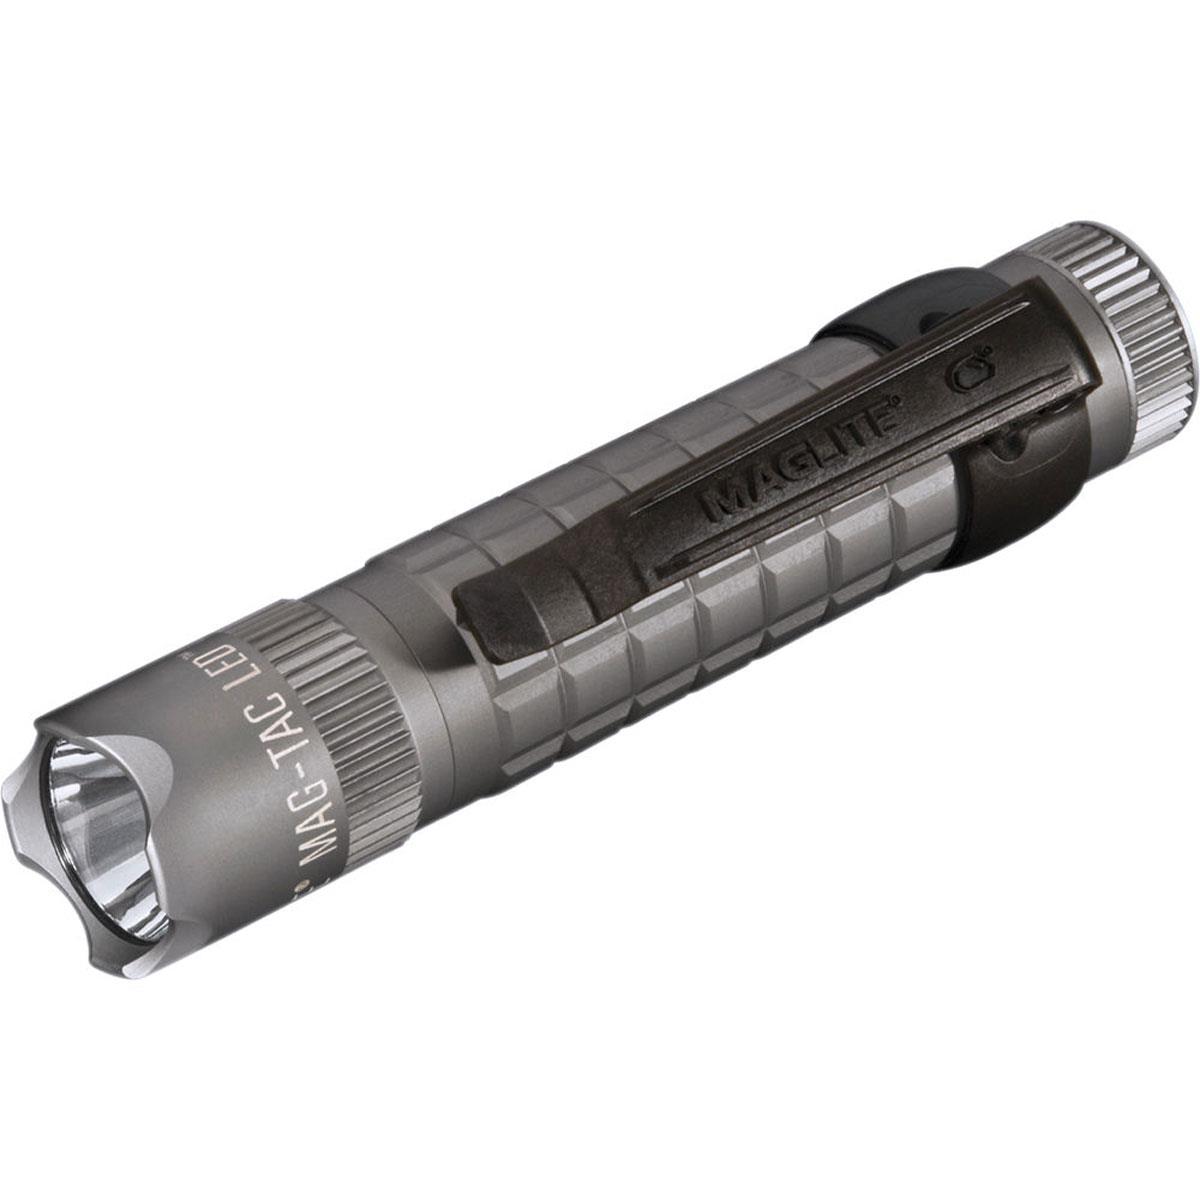 

MagLite Maglite SG2LRC6 Mag-Tac LED Flashlight, Urban Gray